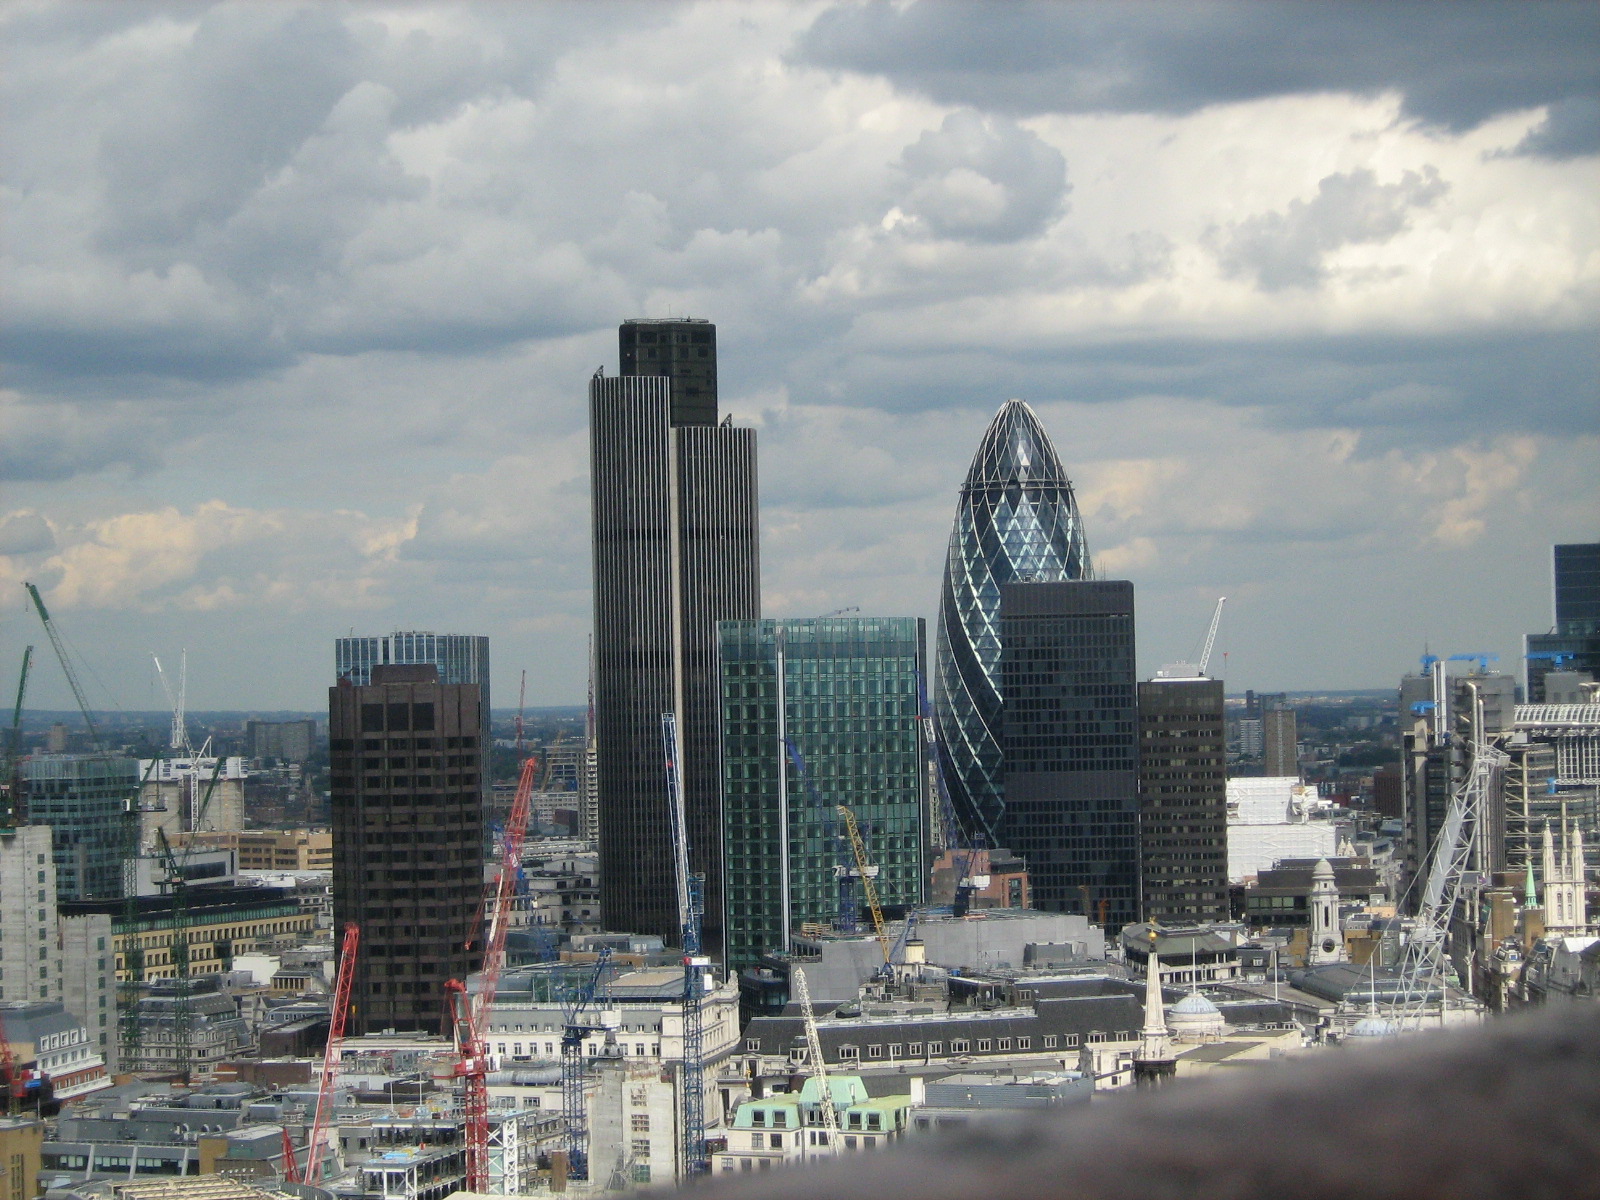 File:London skyline.JPG - Wikipedia, the free encyclopedia